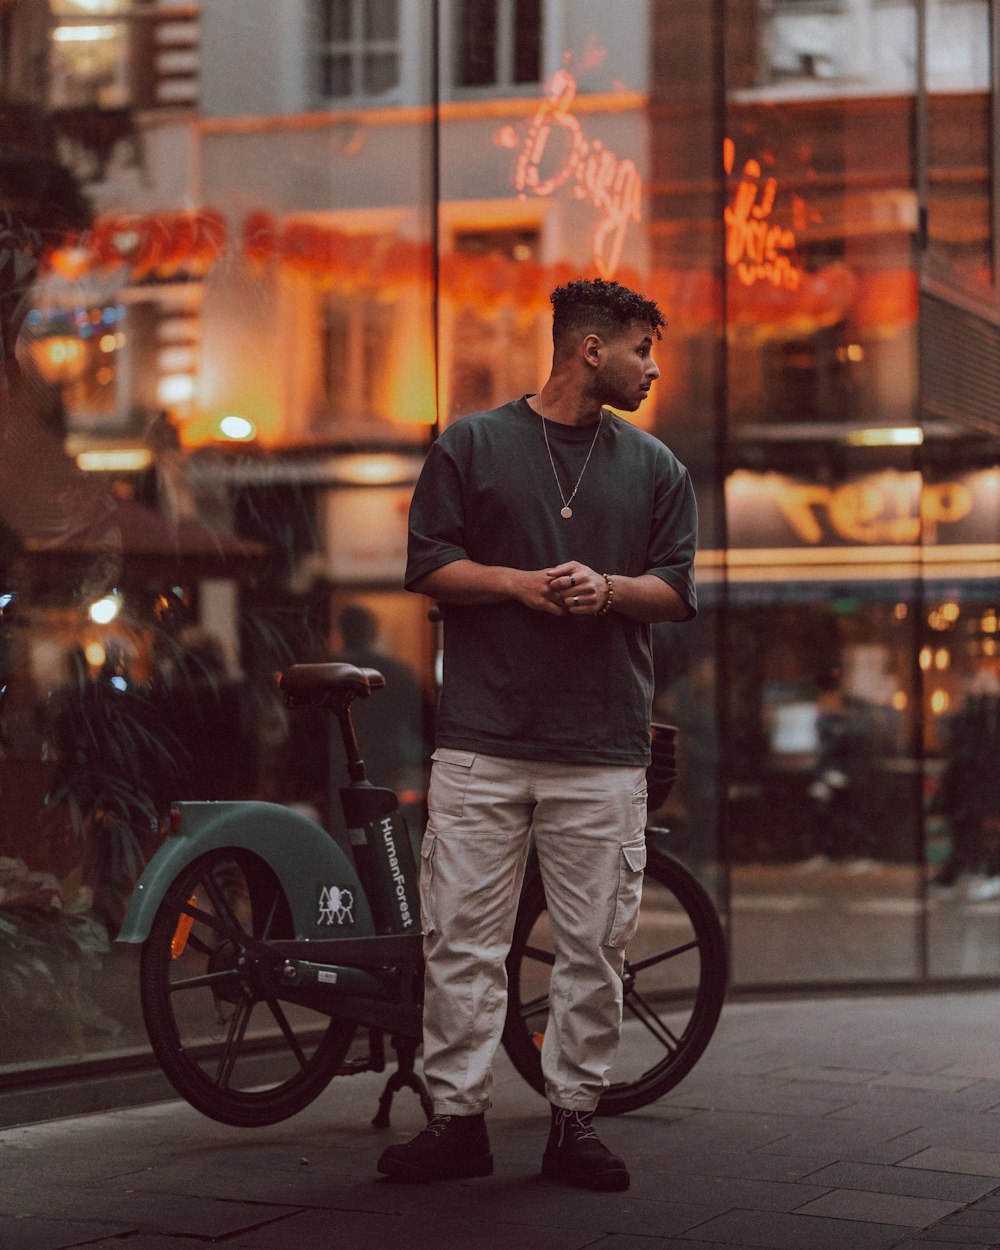 a man standing next to a bike on a city street